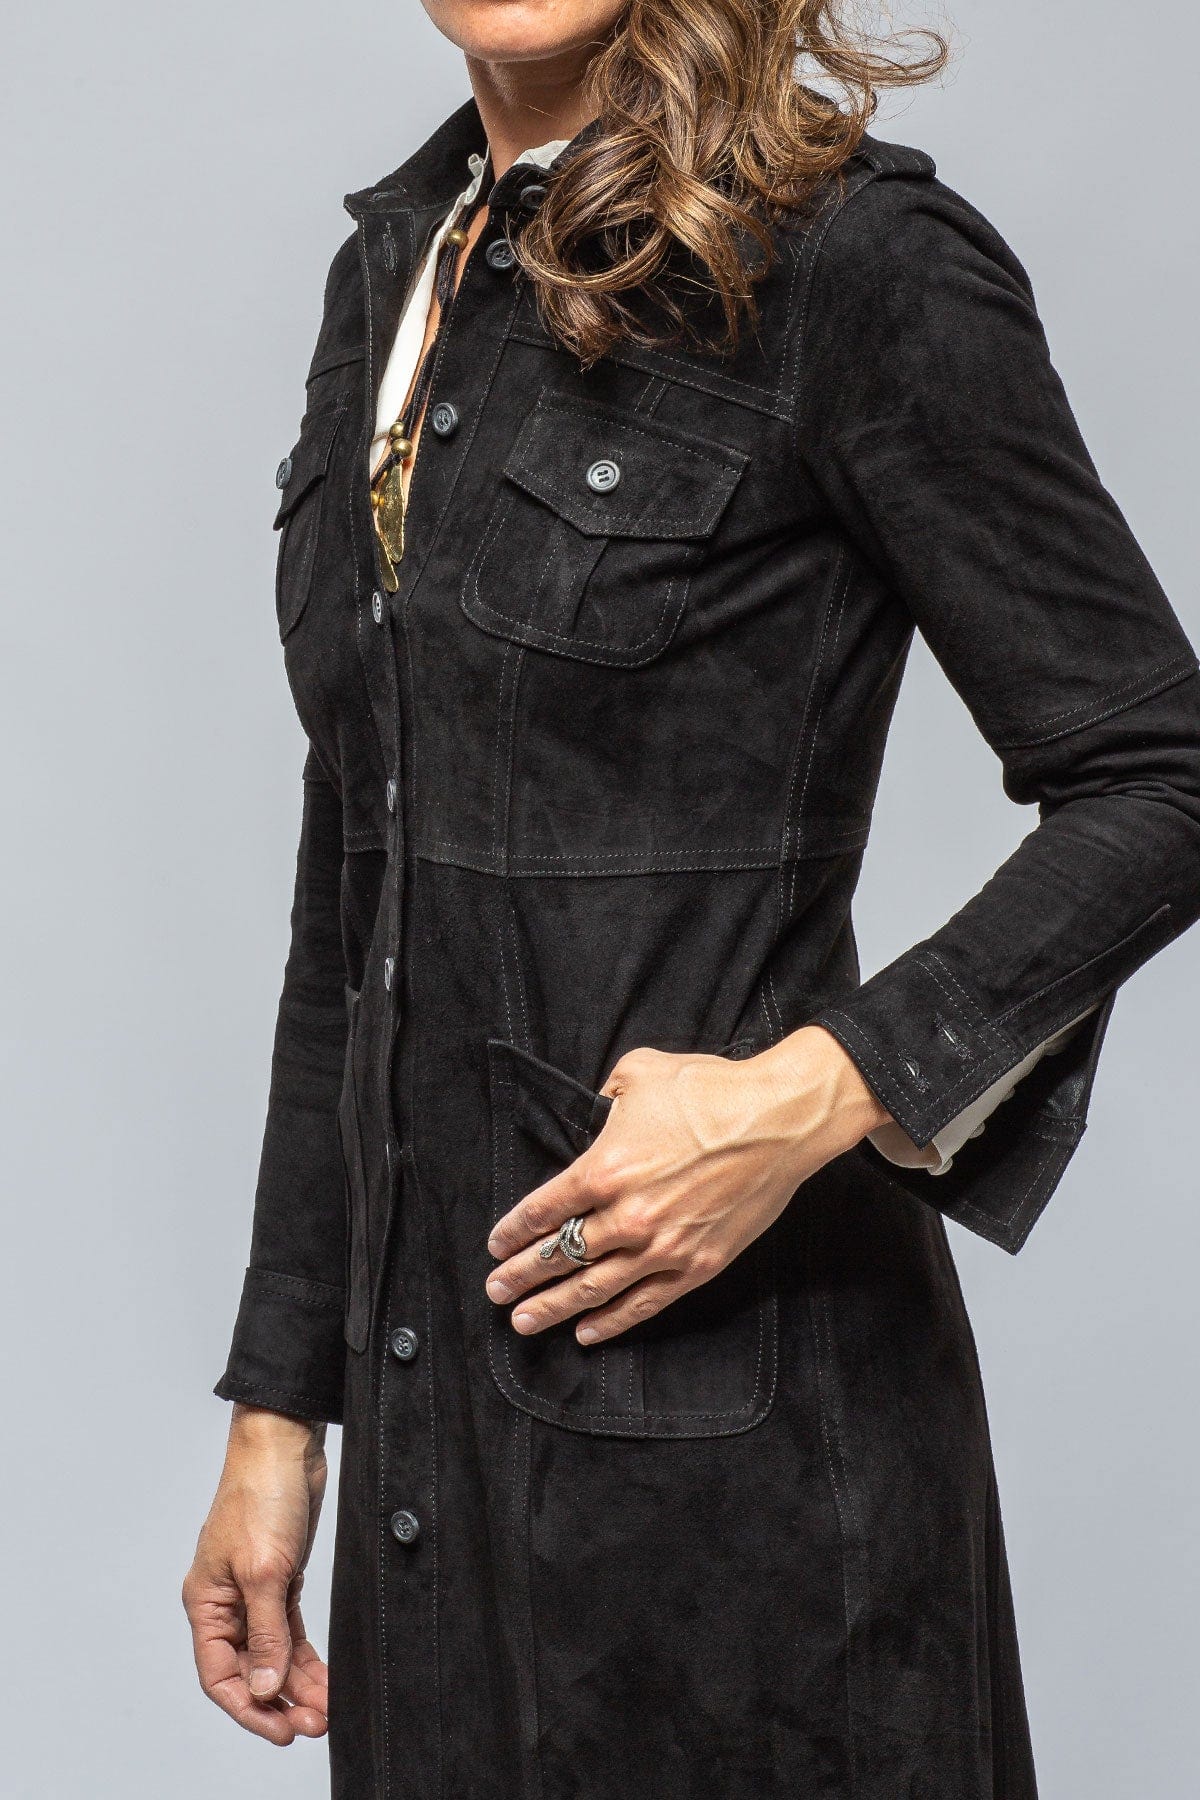 Savannah Long Leather Shirt/Dress in Black - AXEL'S